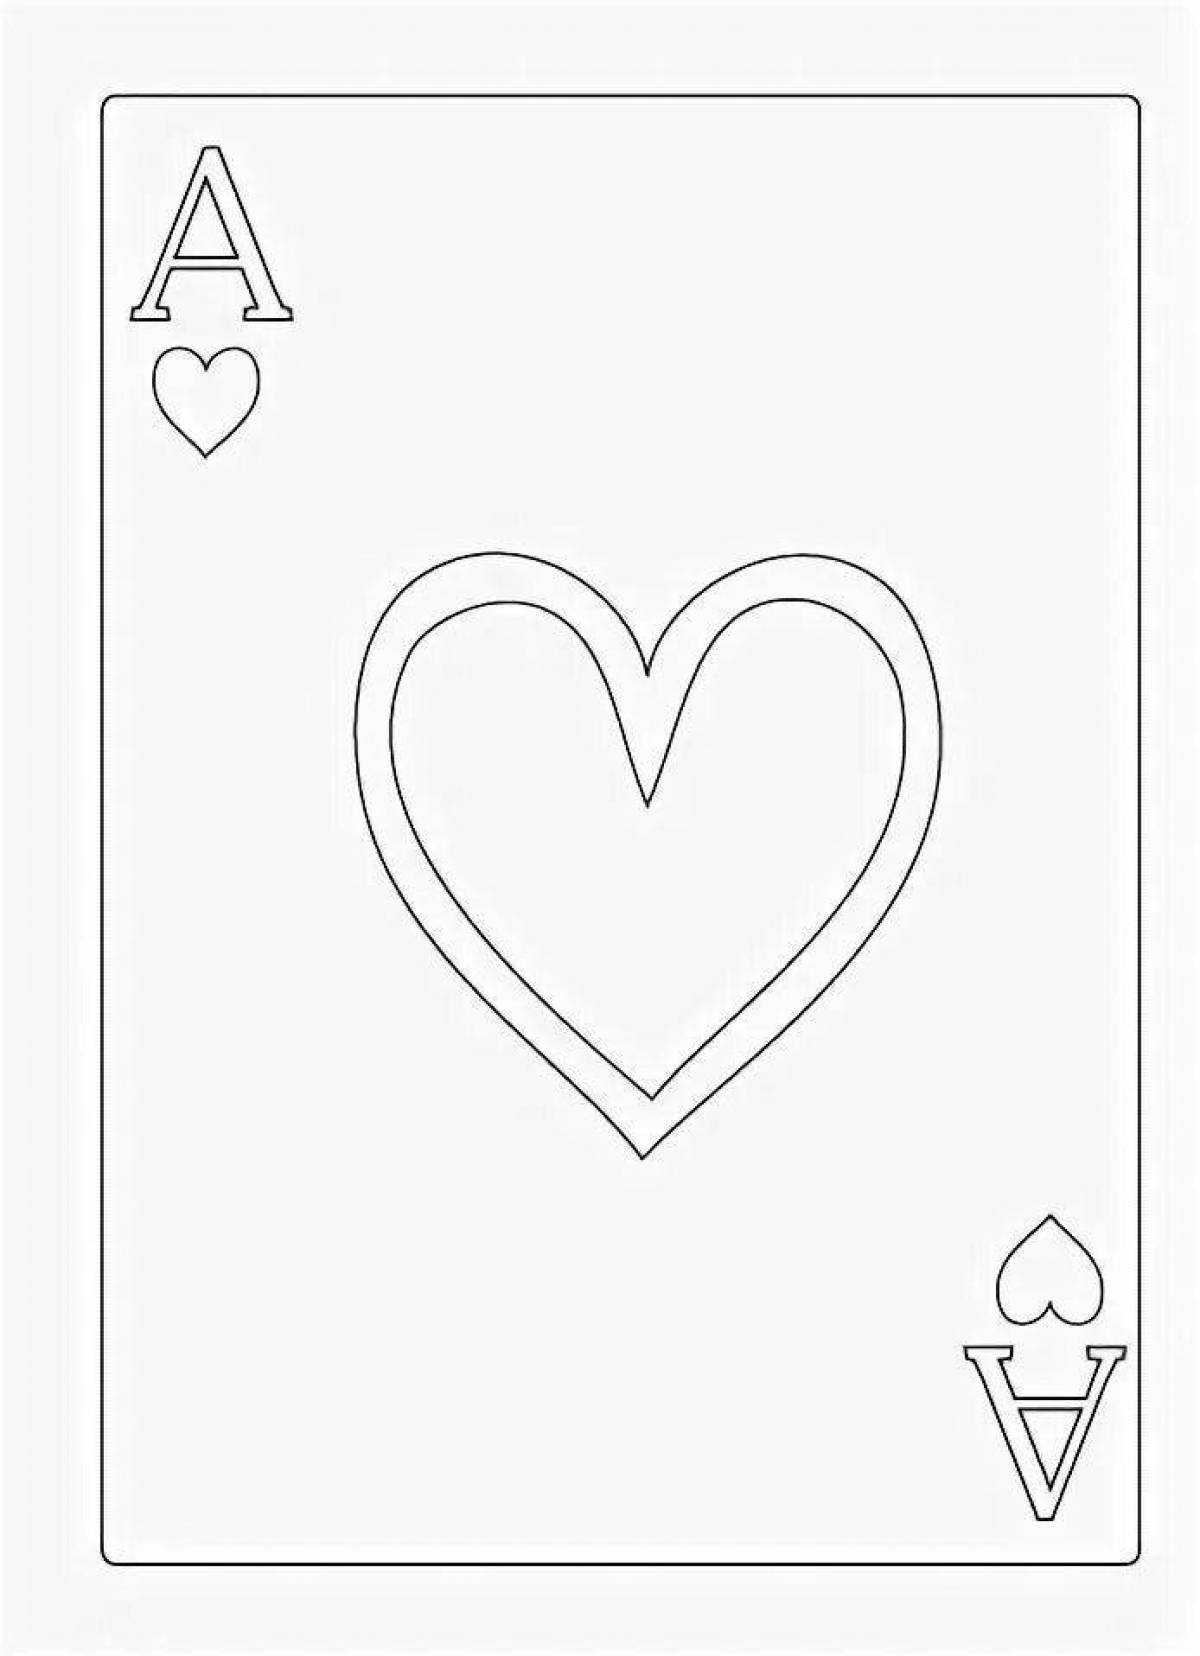 Bright uno card with hearts